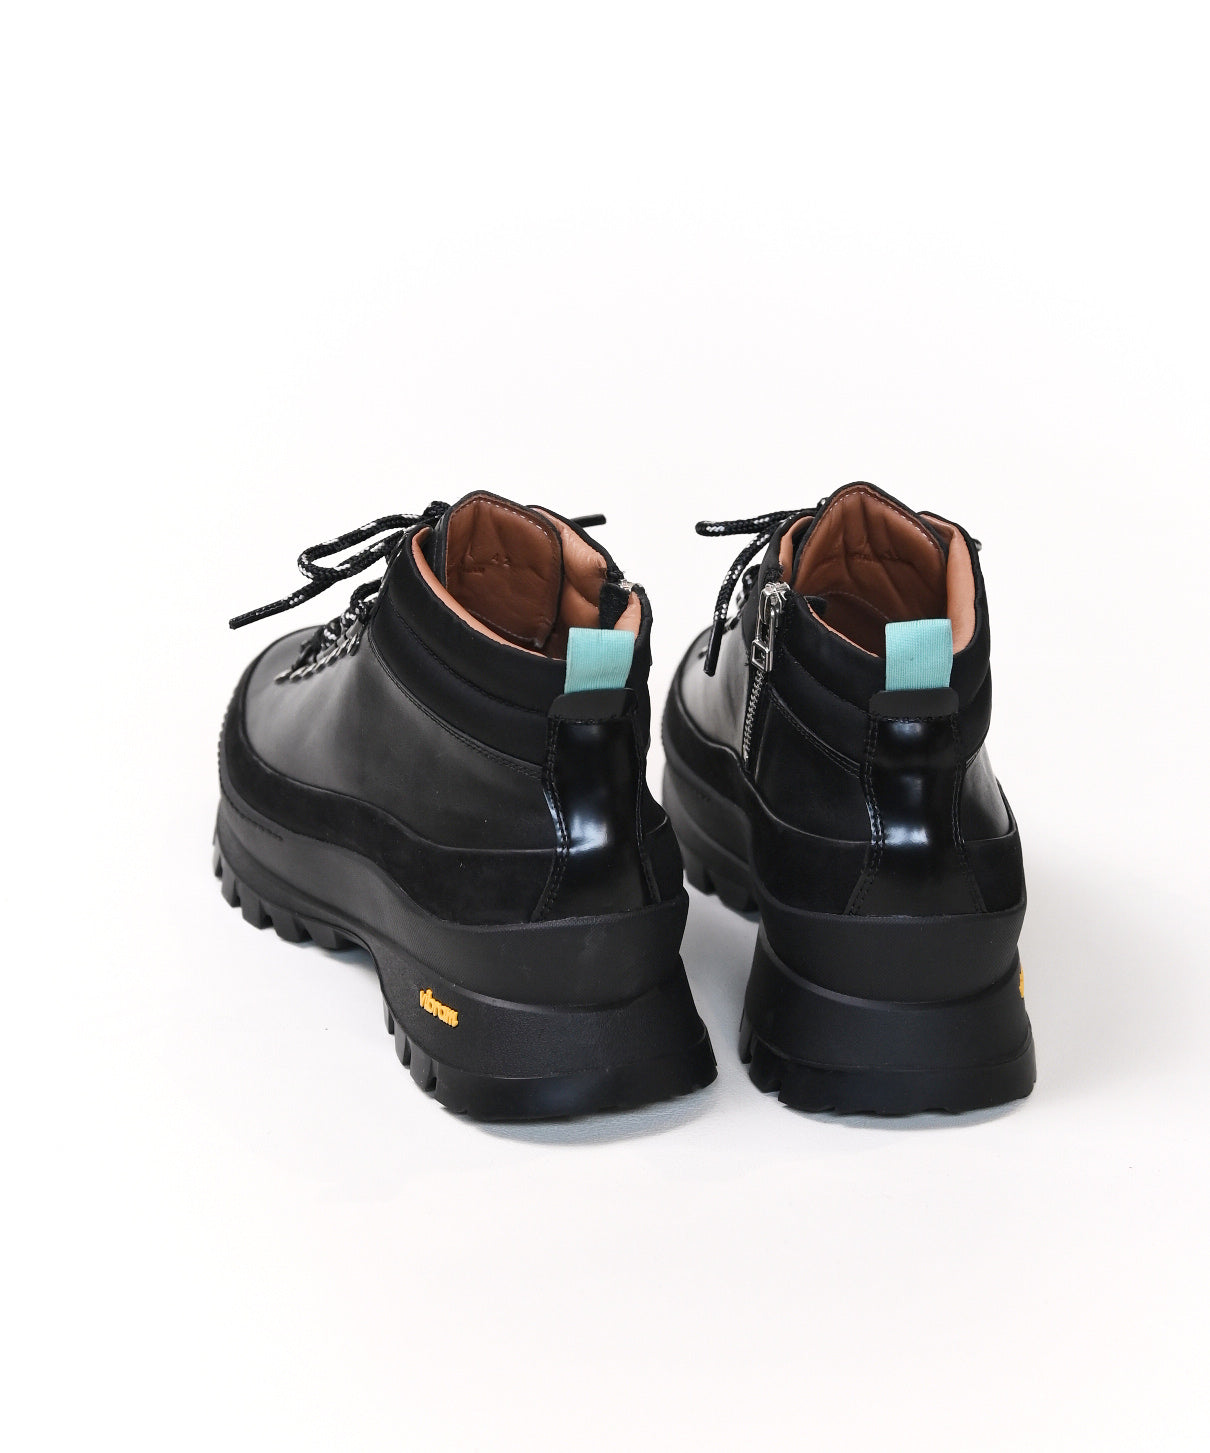 Mountain sneaker boots / ER2434